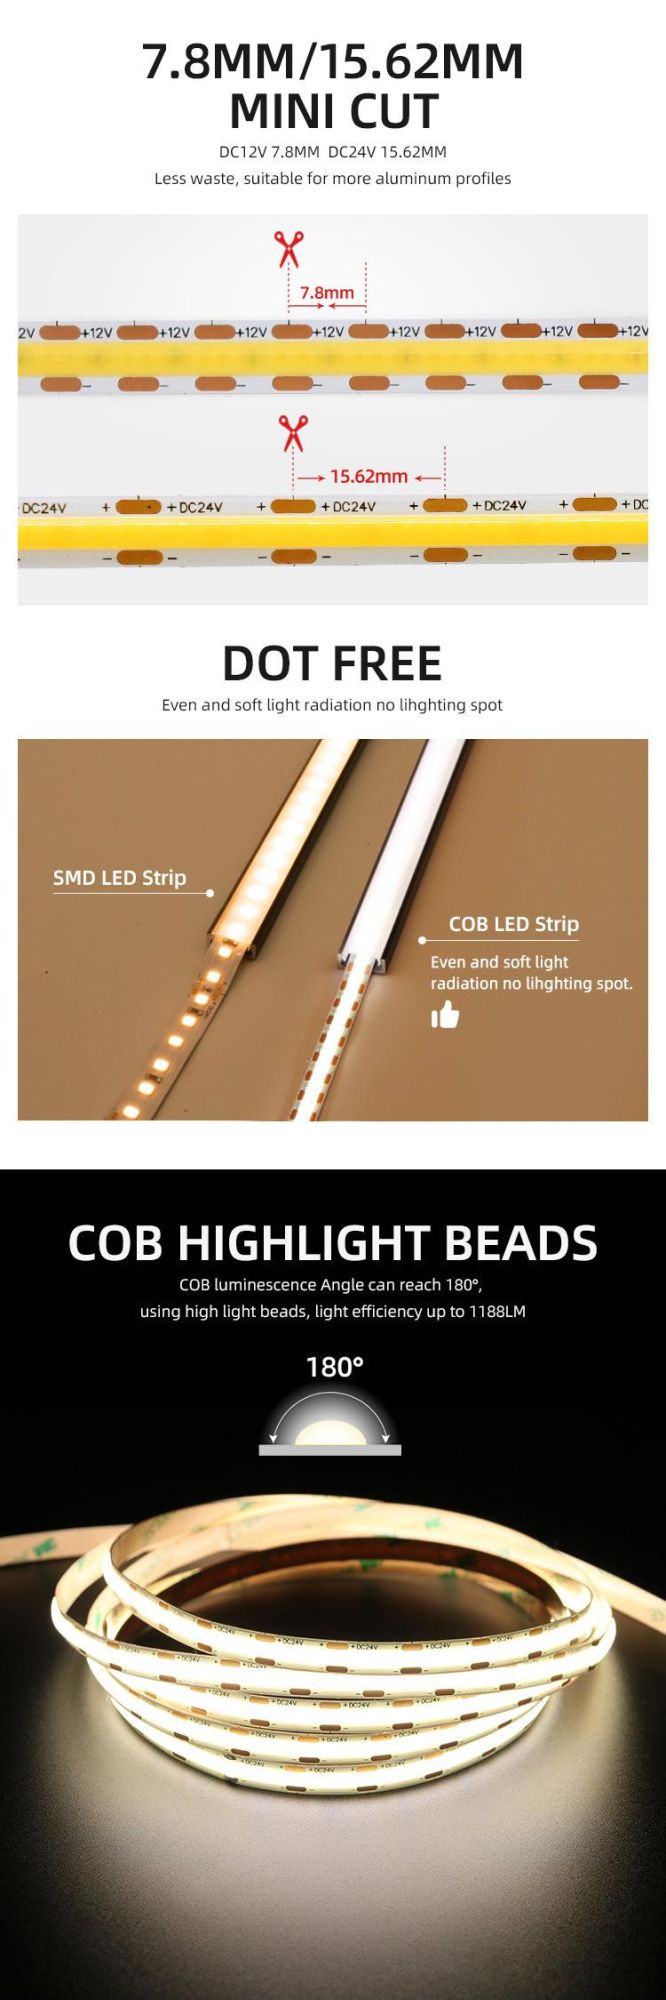 7.8mm One Cut DC12V LED COB Strip Light COB LED Strip Light